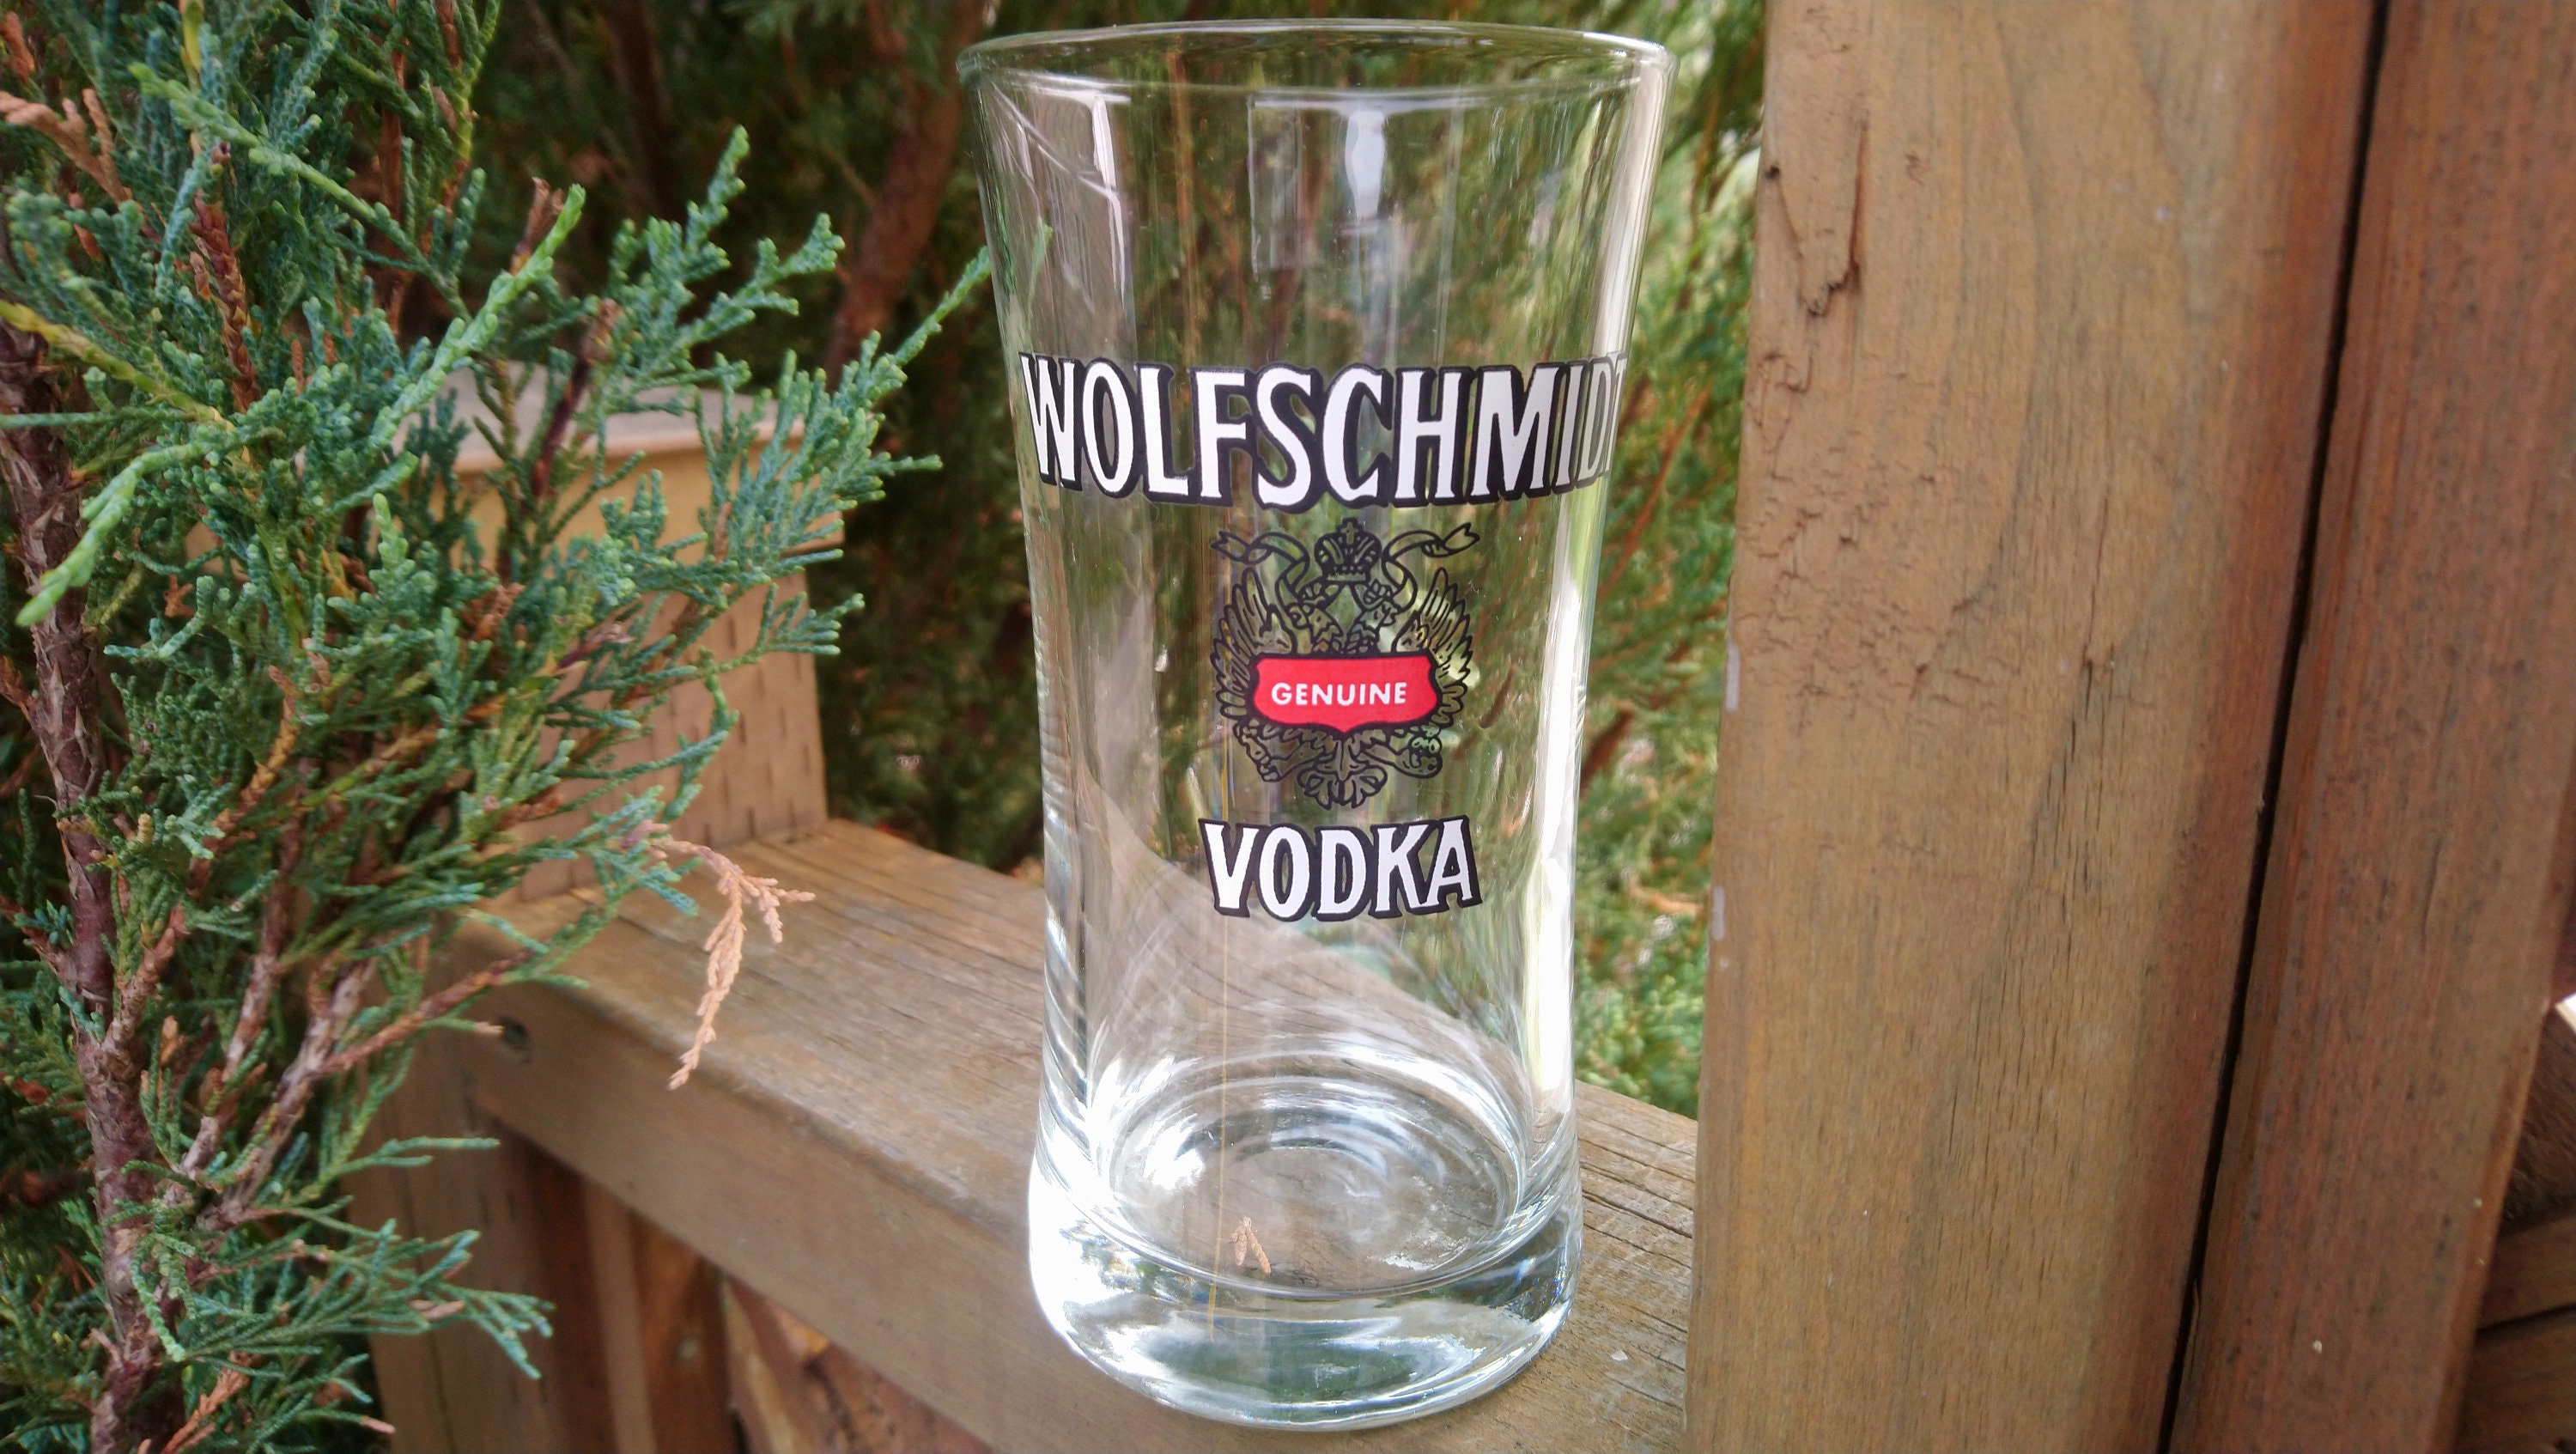 Vodka Highball Glass Set - Tall Tumblers - Custom Pint Glass - Bar ware